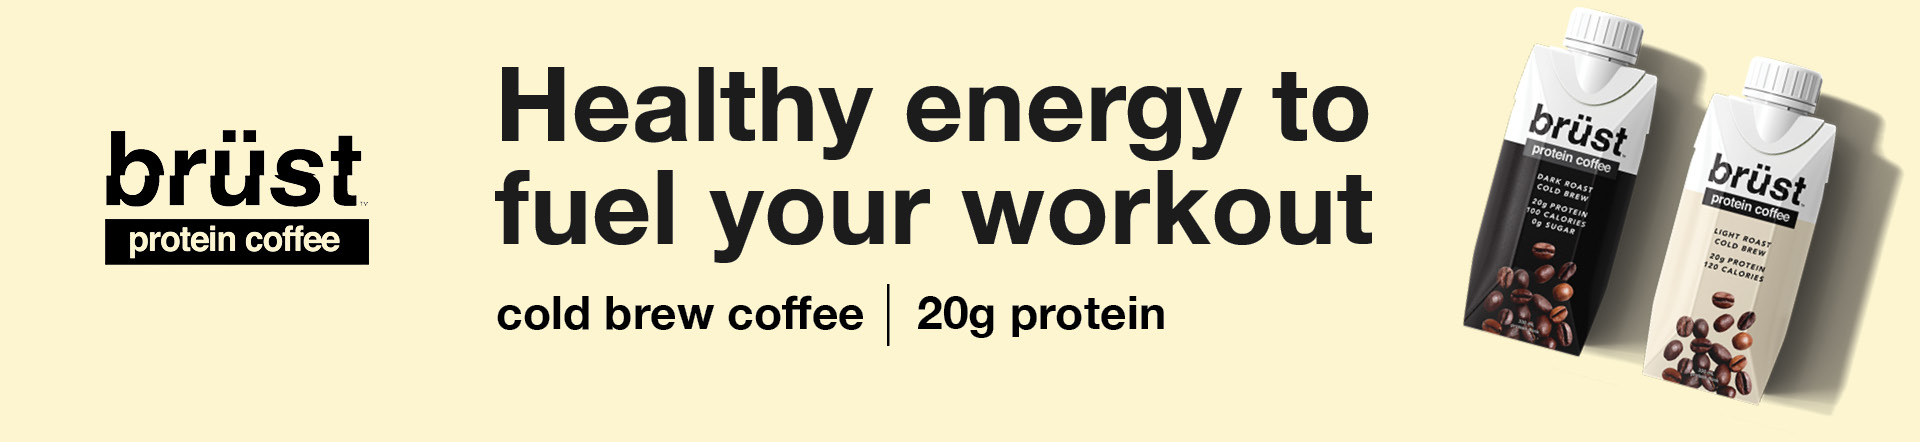 Brust Protein Coffee